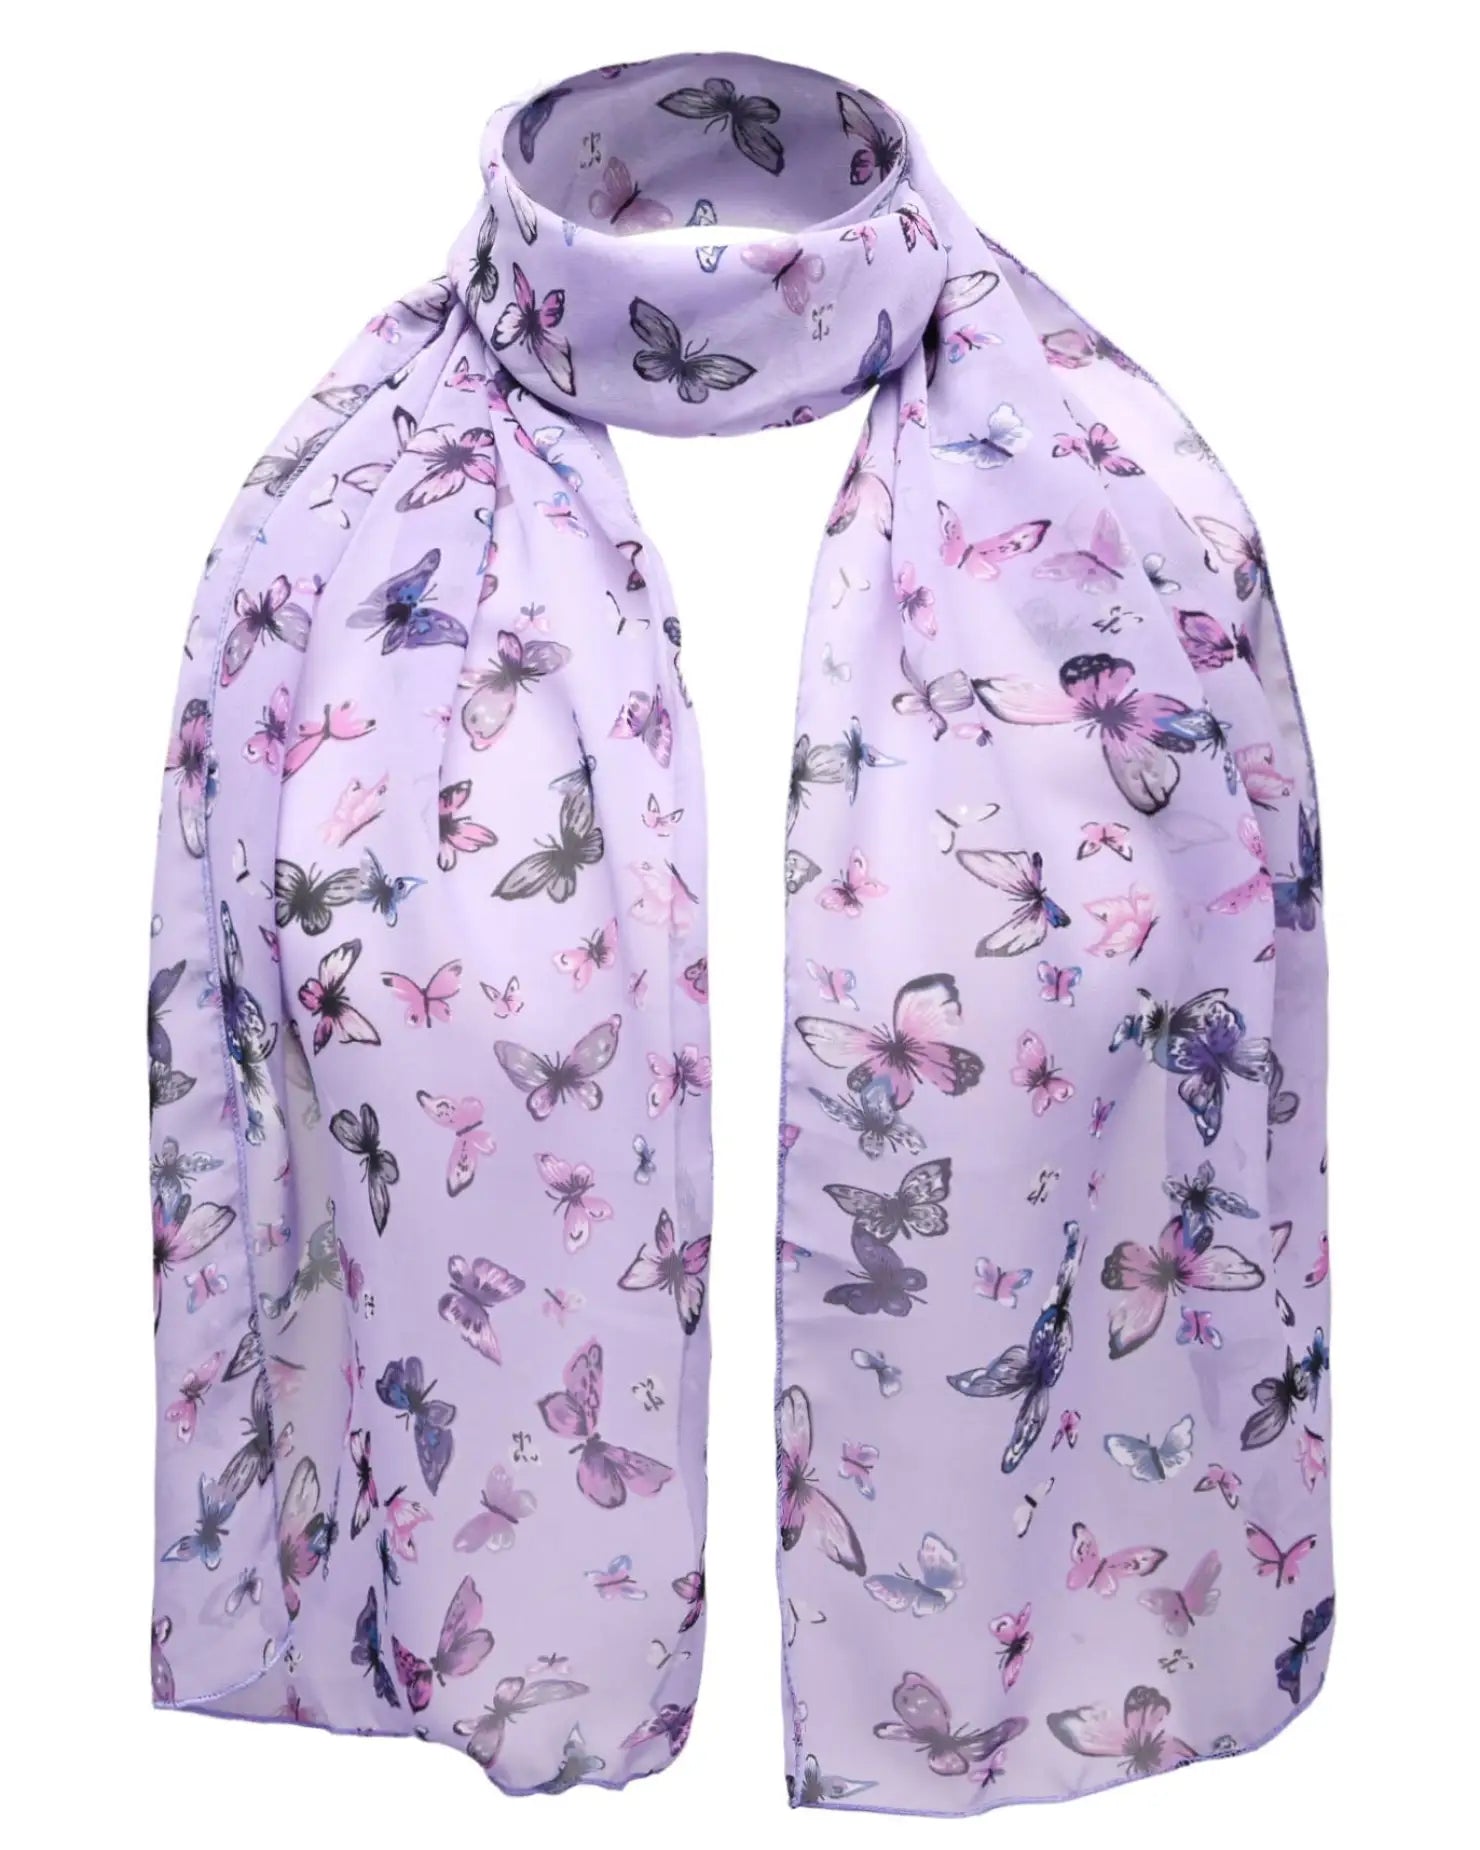 Purple butterfly print scarf: Lightweight, soft & versatile accessory